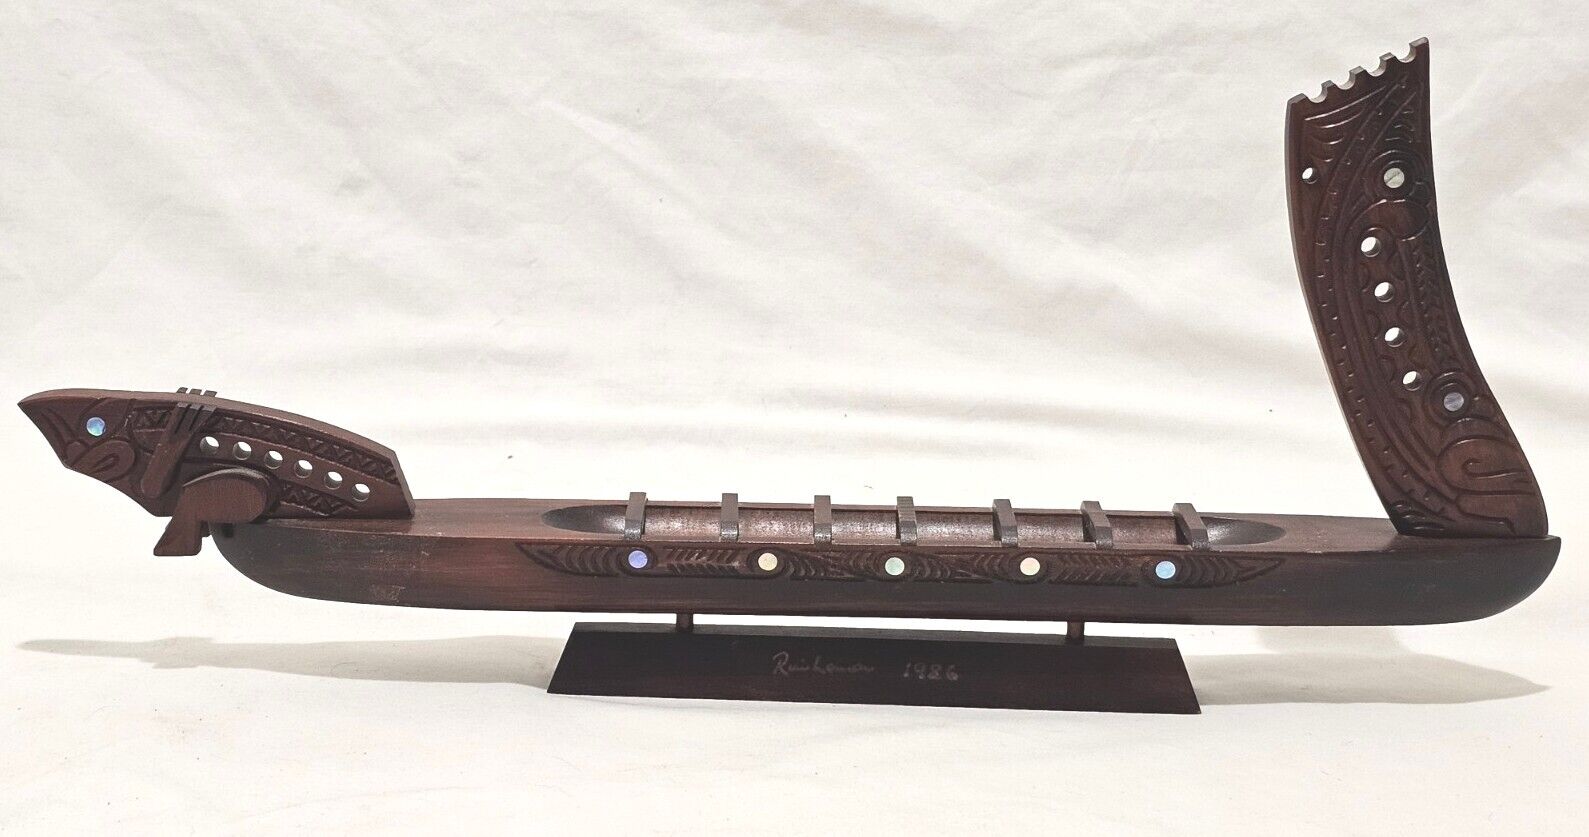 Vintage Hand Crafted Vintage Maori Tekoteko Wooden Long Canoe ~ 19